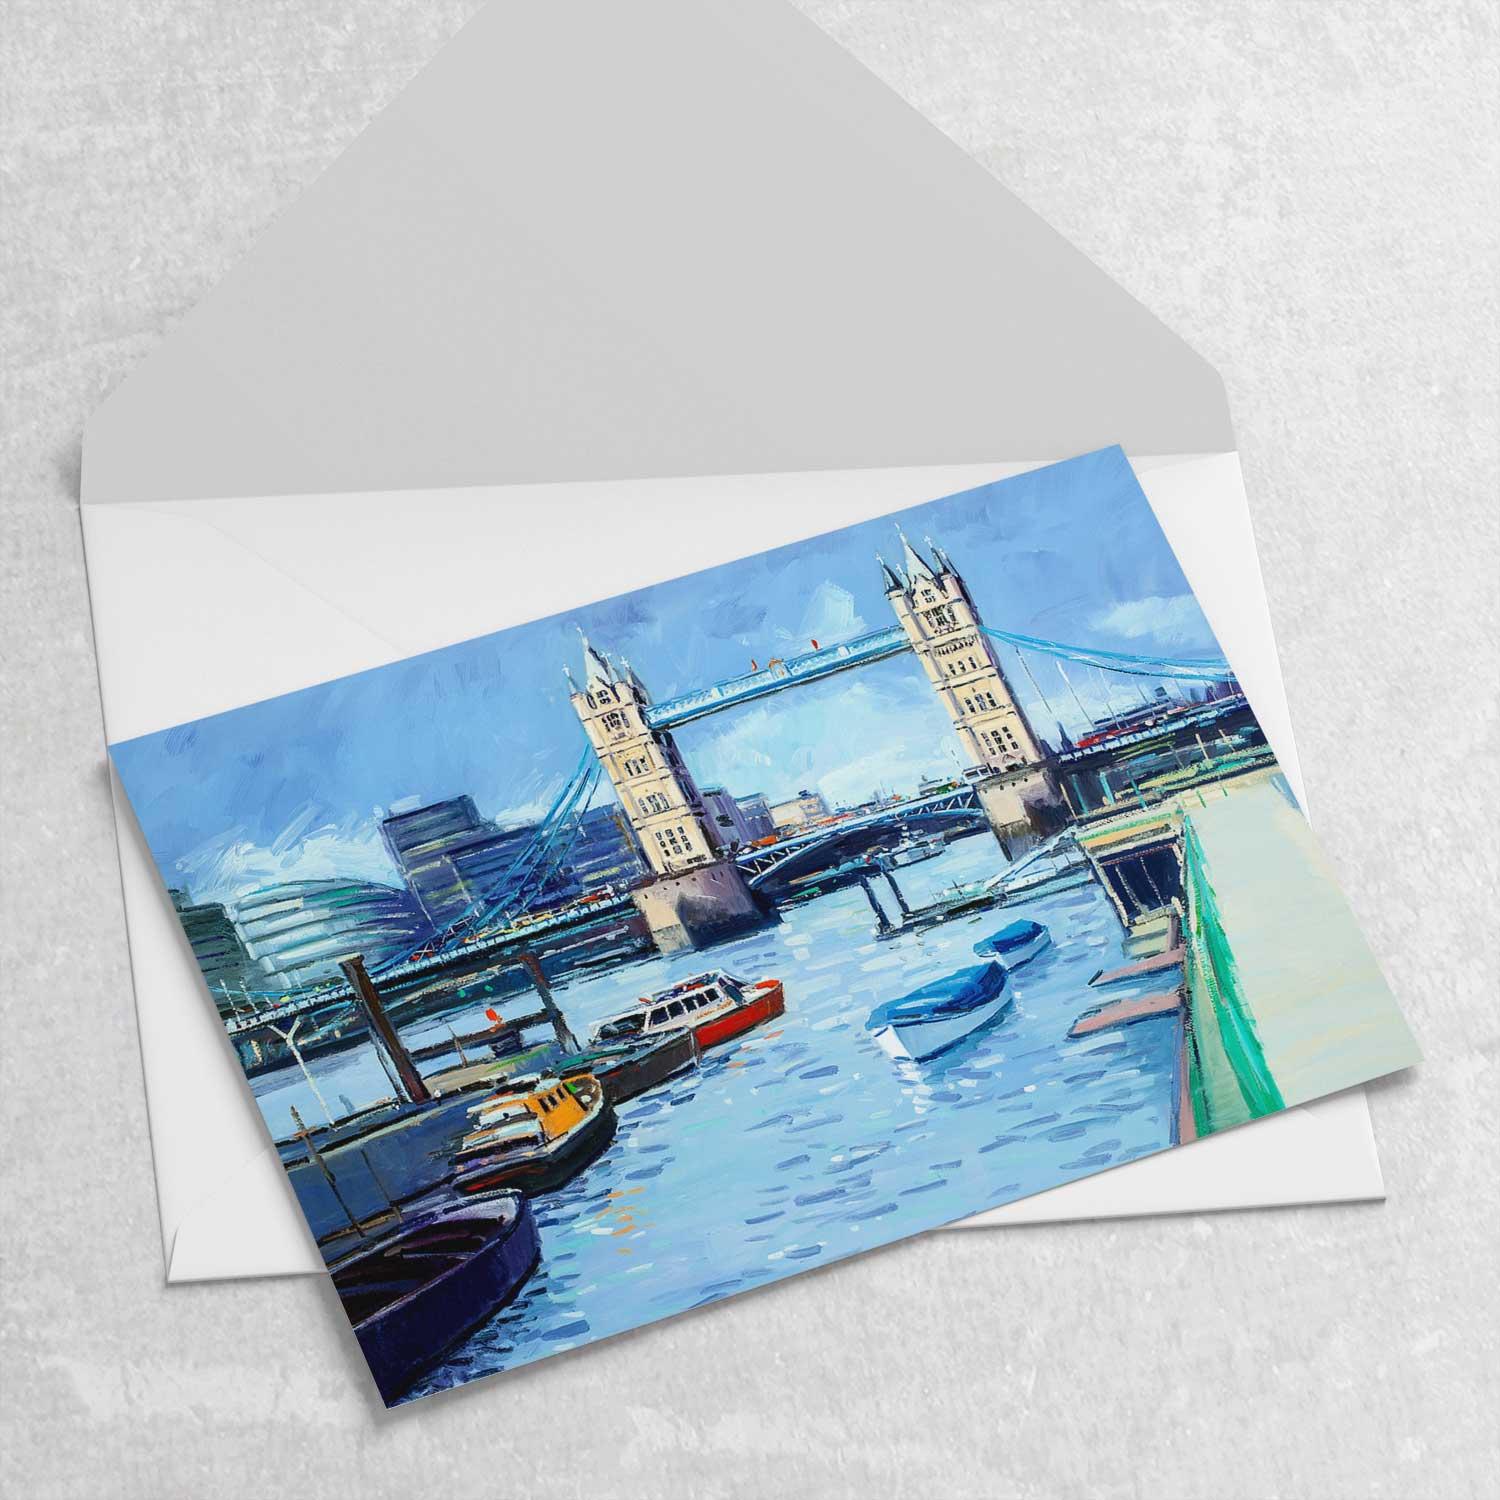 Tower Bridge Greeting Card from an original painting by artist Robert Kelsey